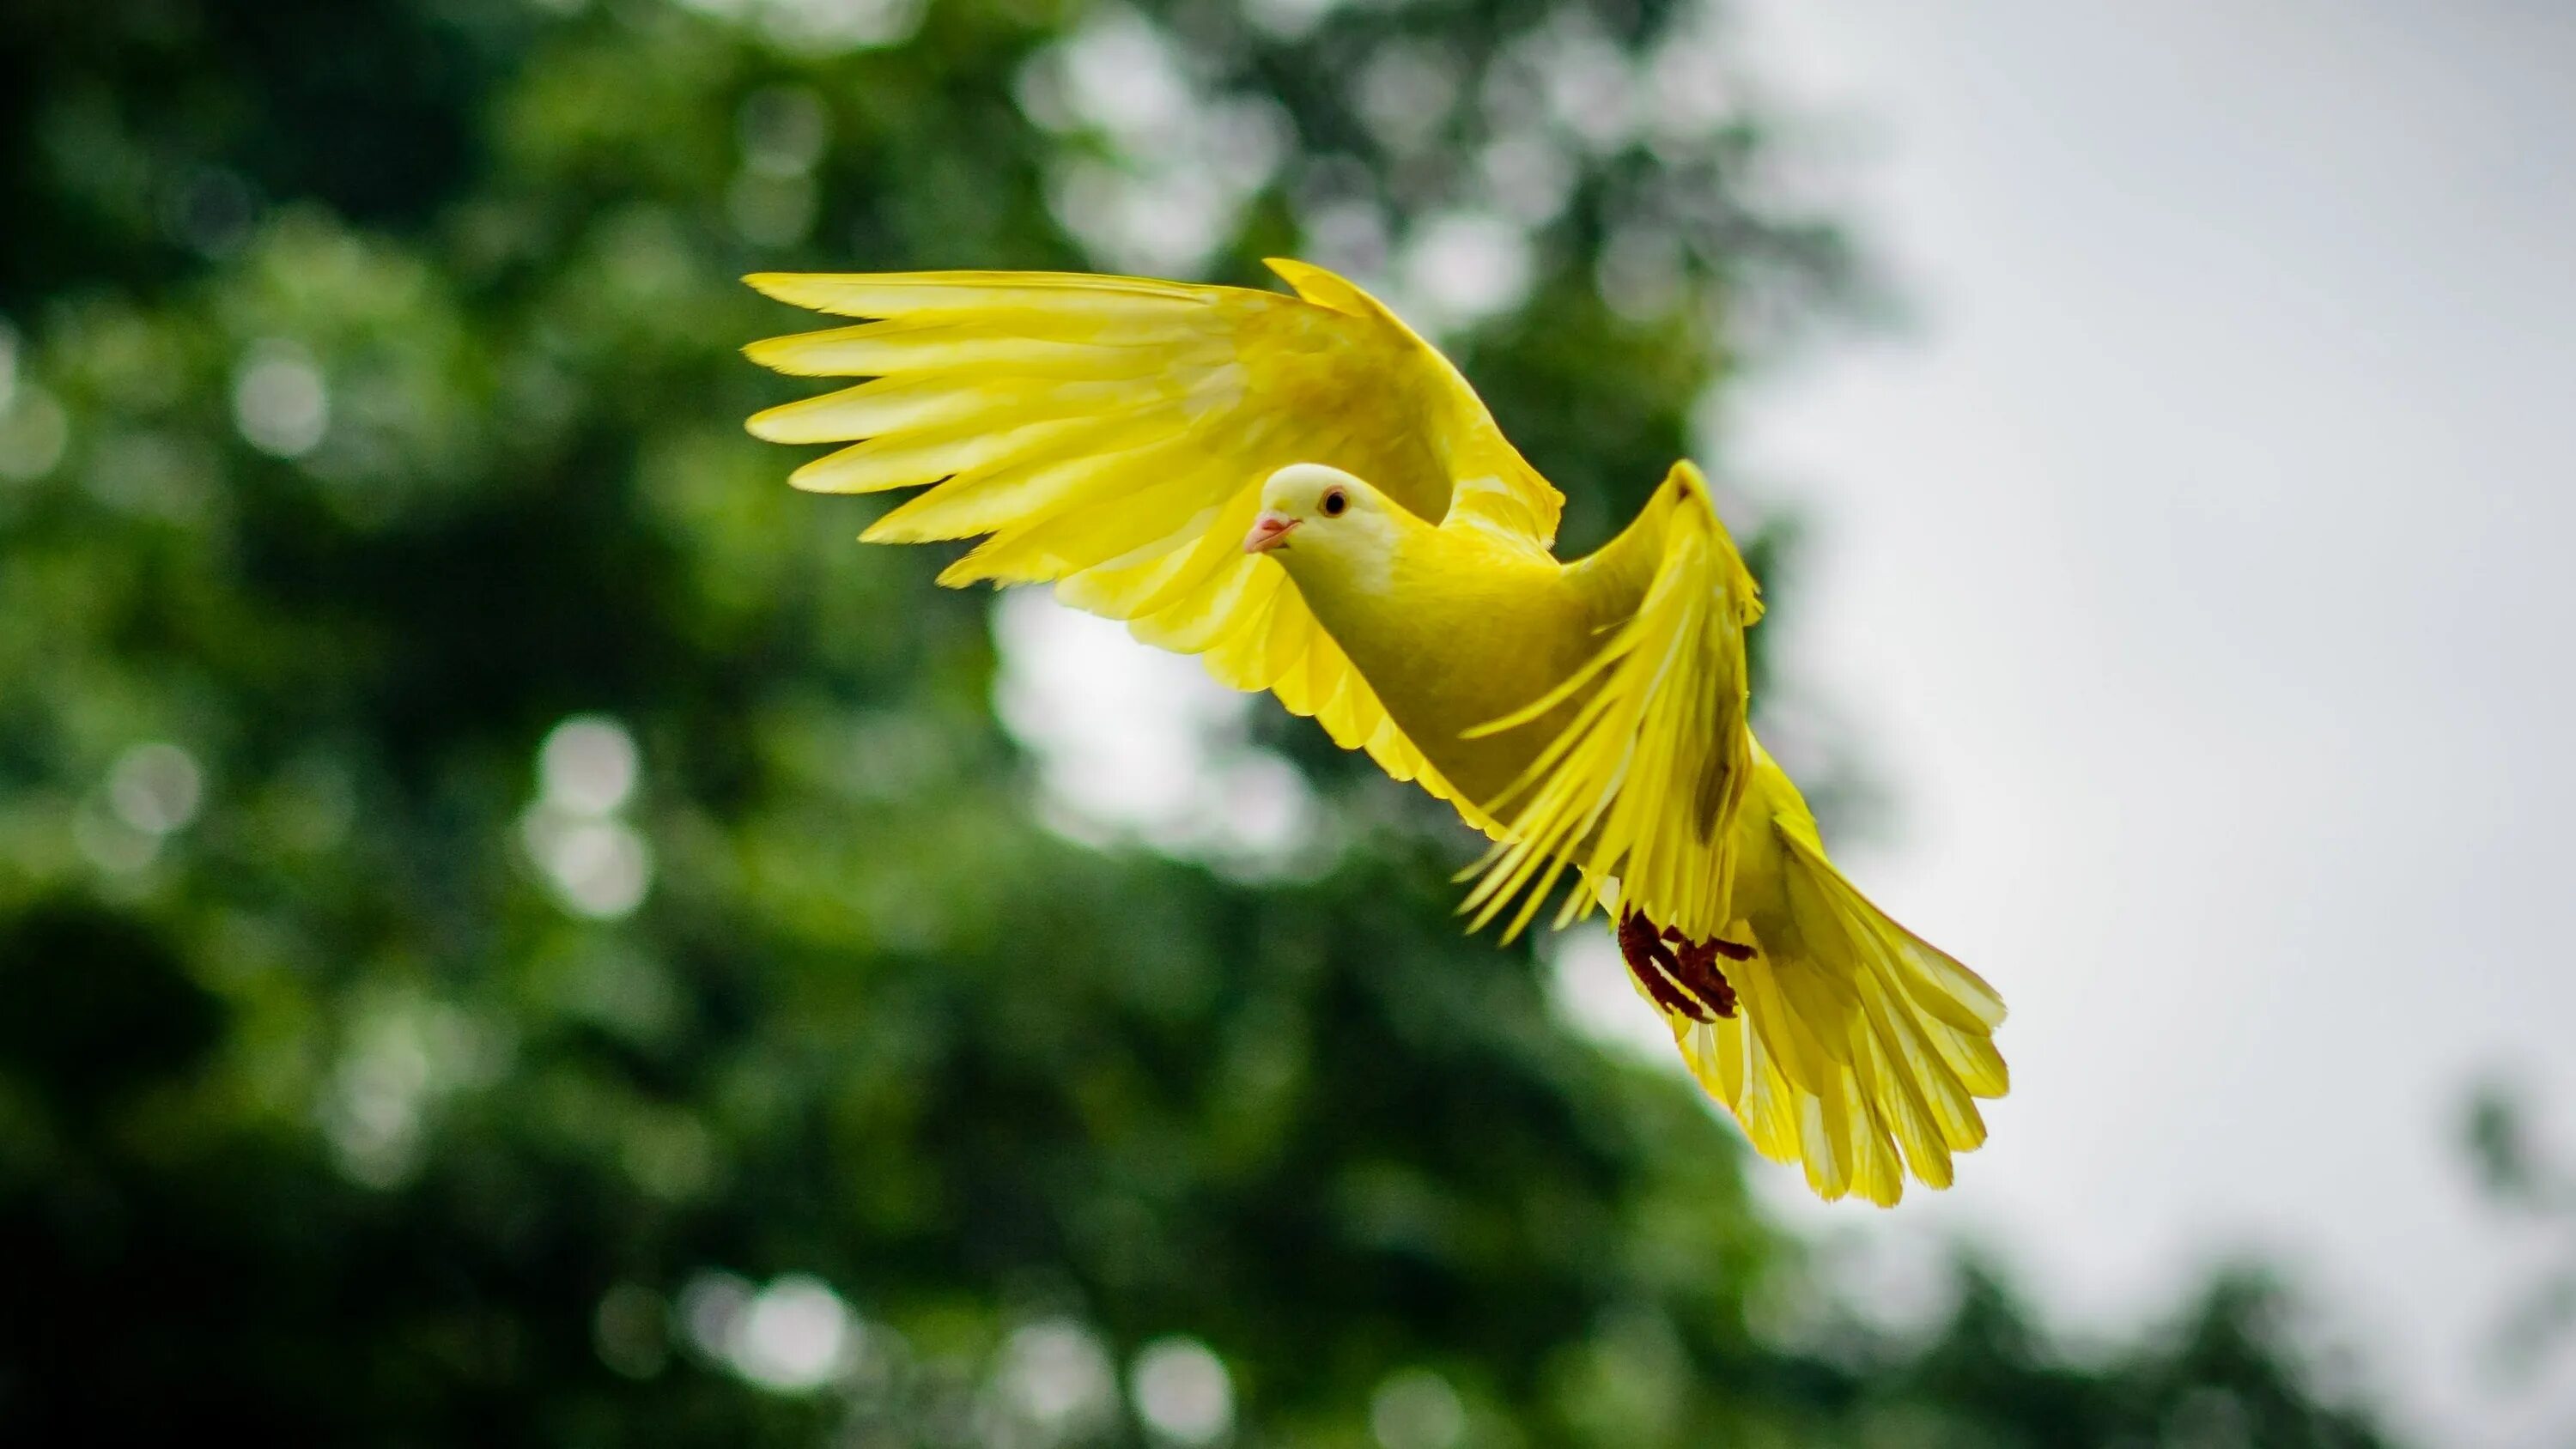 Bird has flown. Желтая птица. Красивая птица в полете. Канарейка в полете. Яркая золотистая птица.